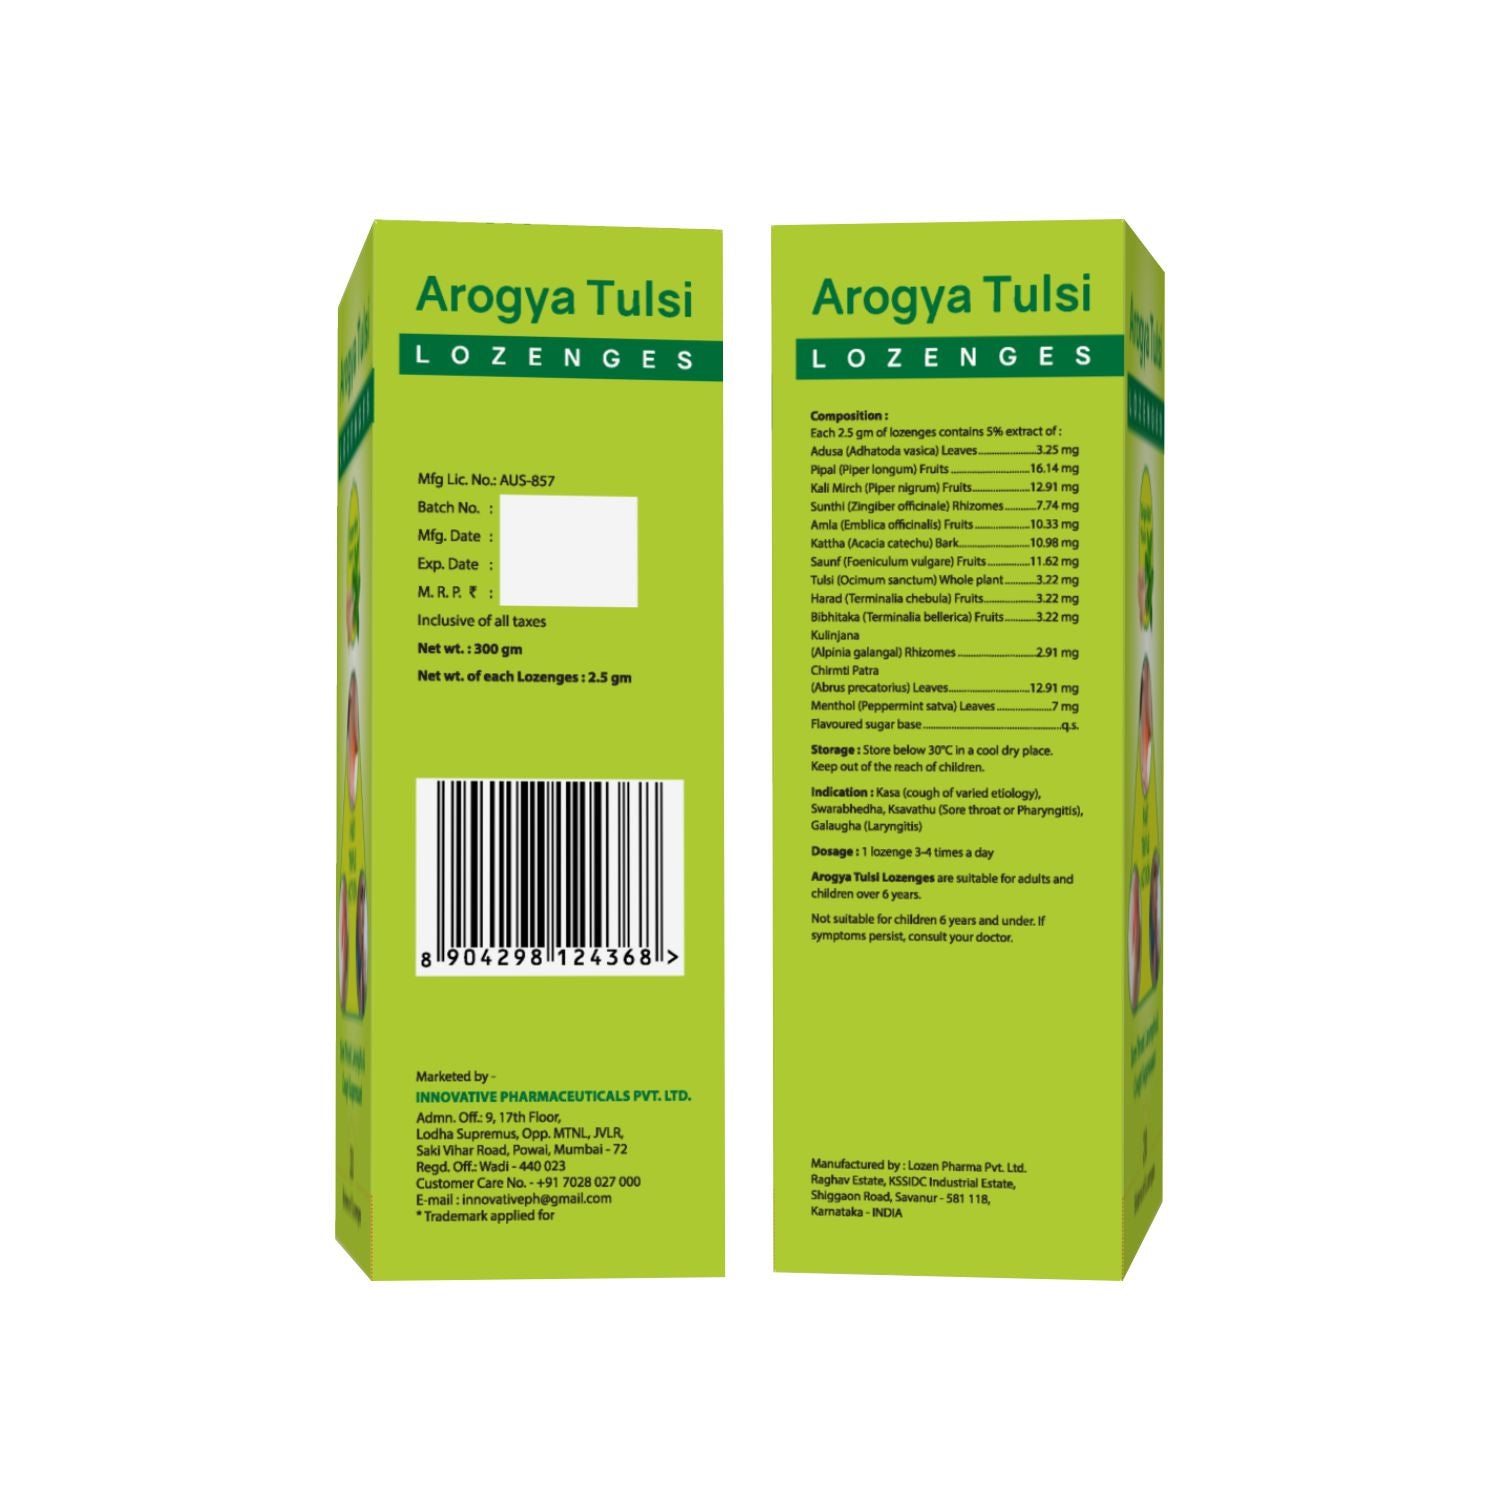 Arogya Tulsi Lozenges (Ginger Mint Flavour)